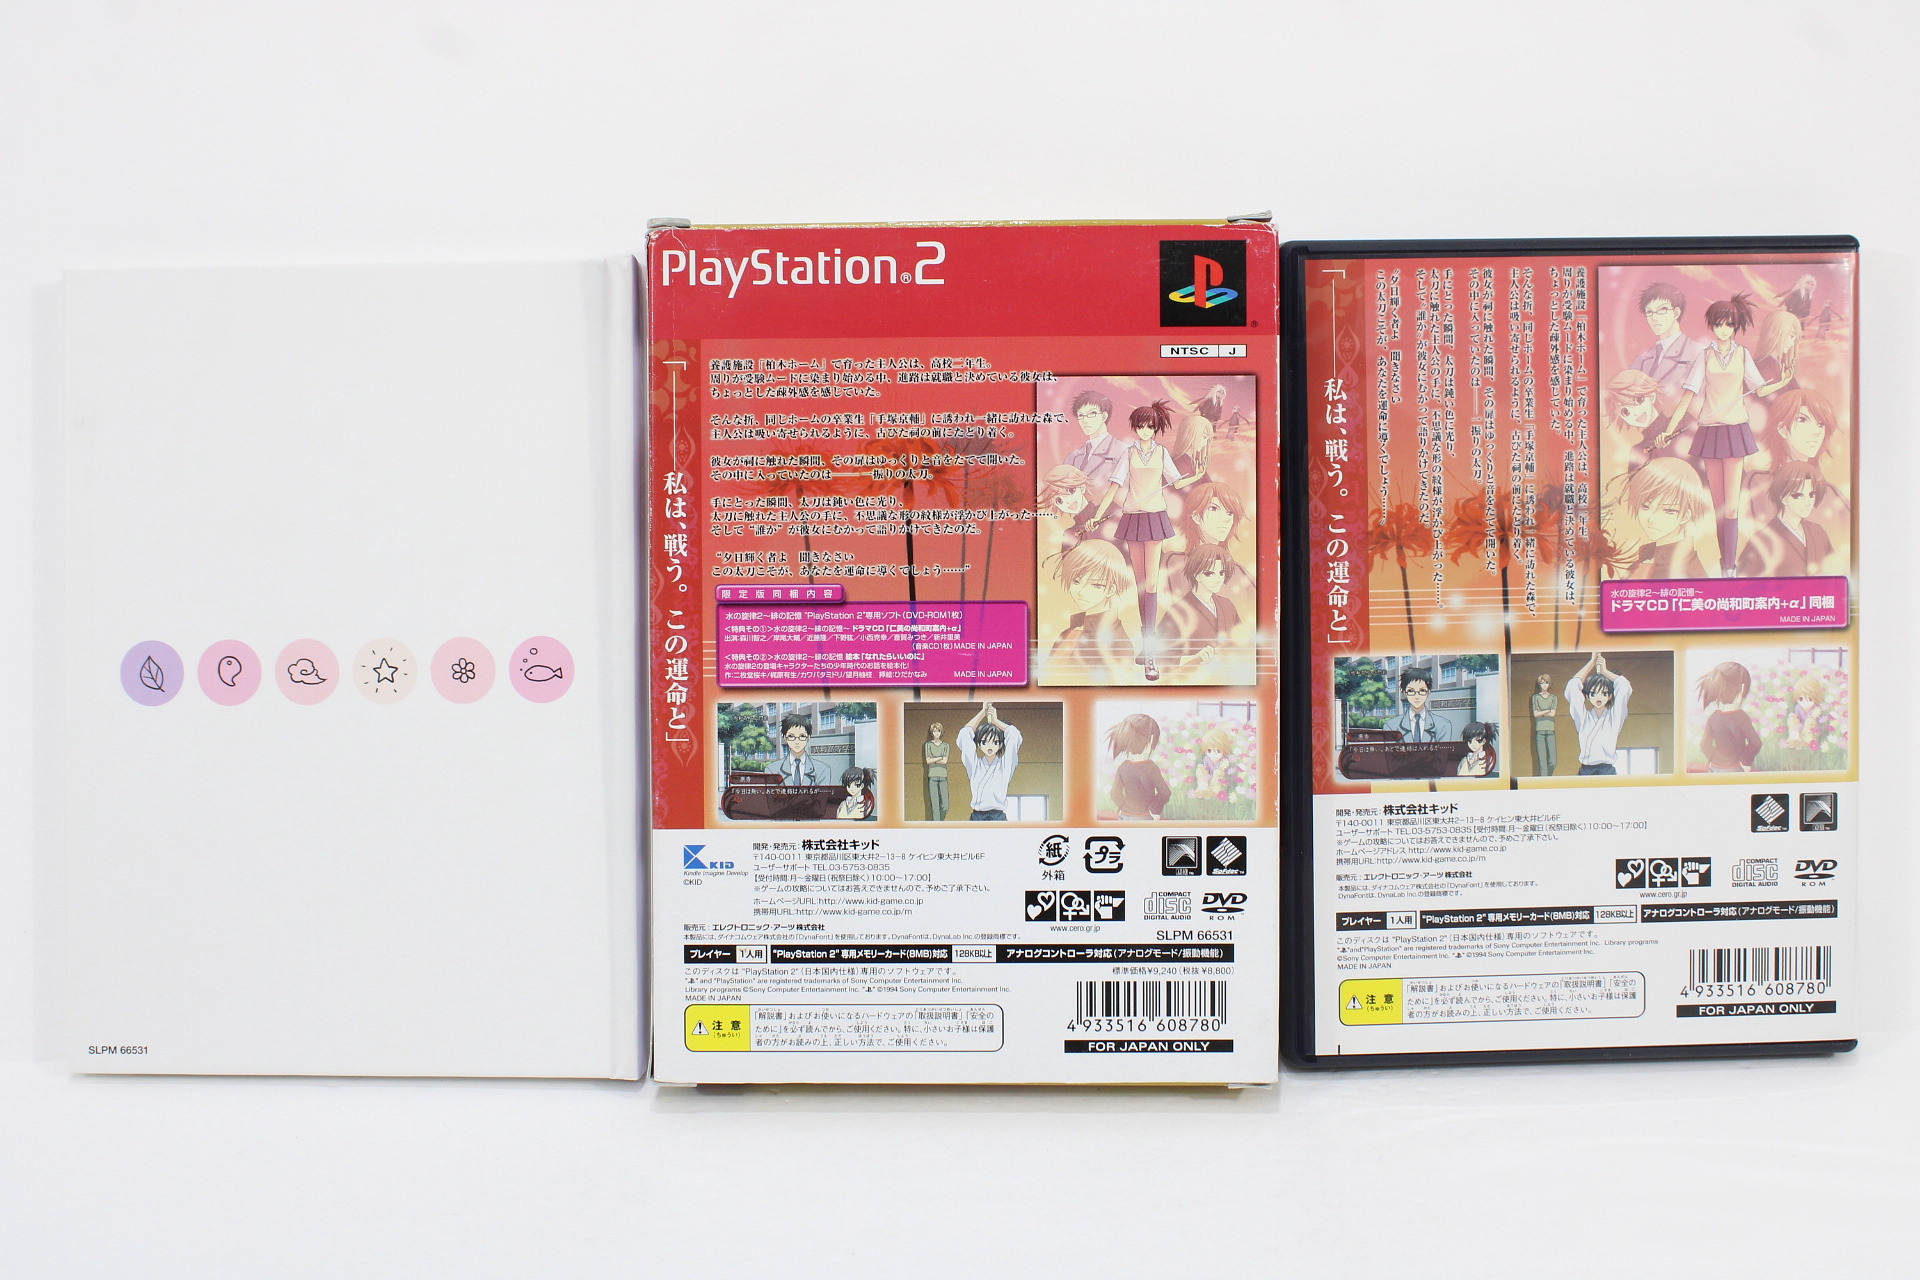 Mizu no Senritsu 2 Hi no Kioku Limited Edition (B) PS2